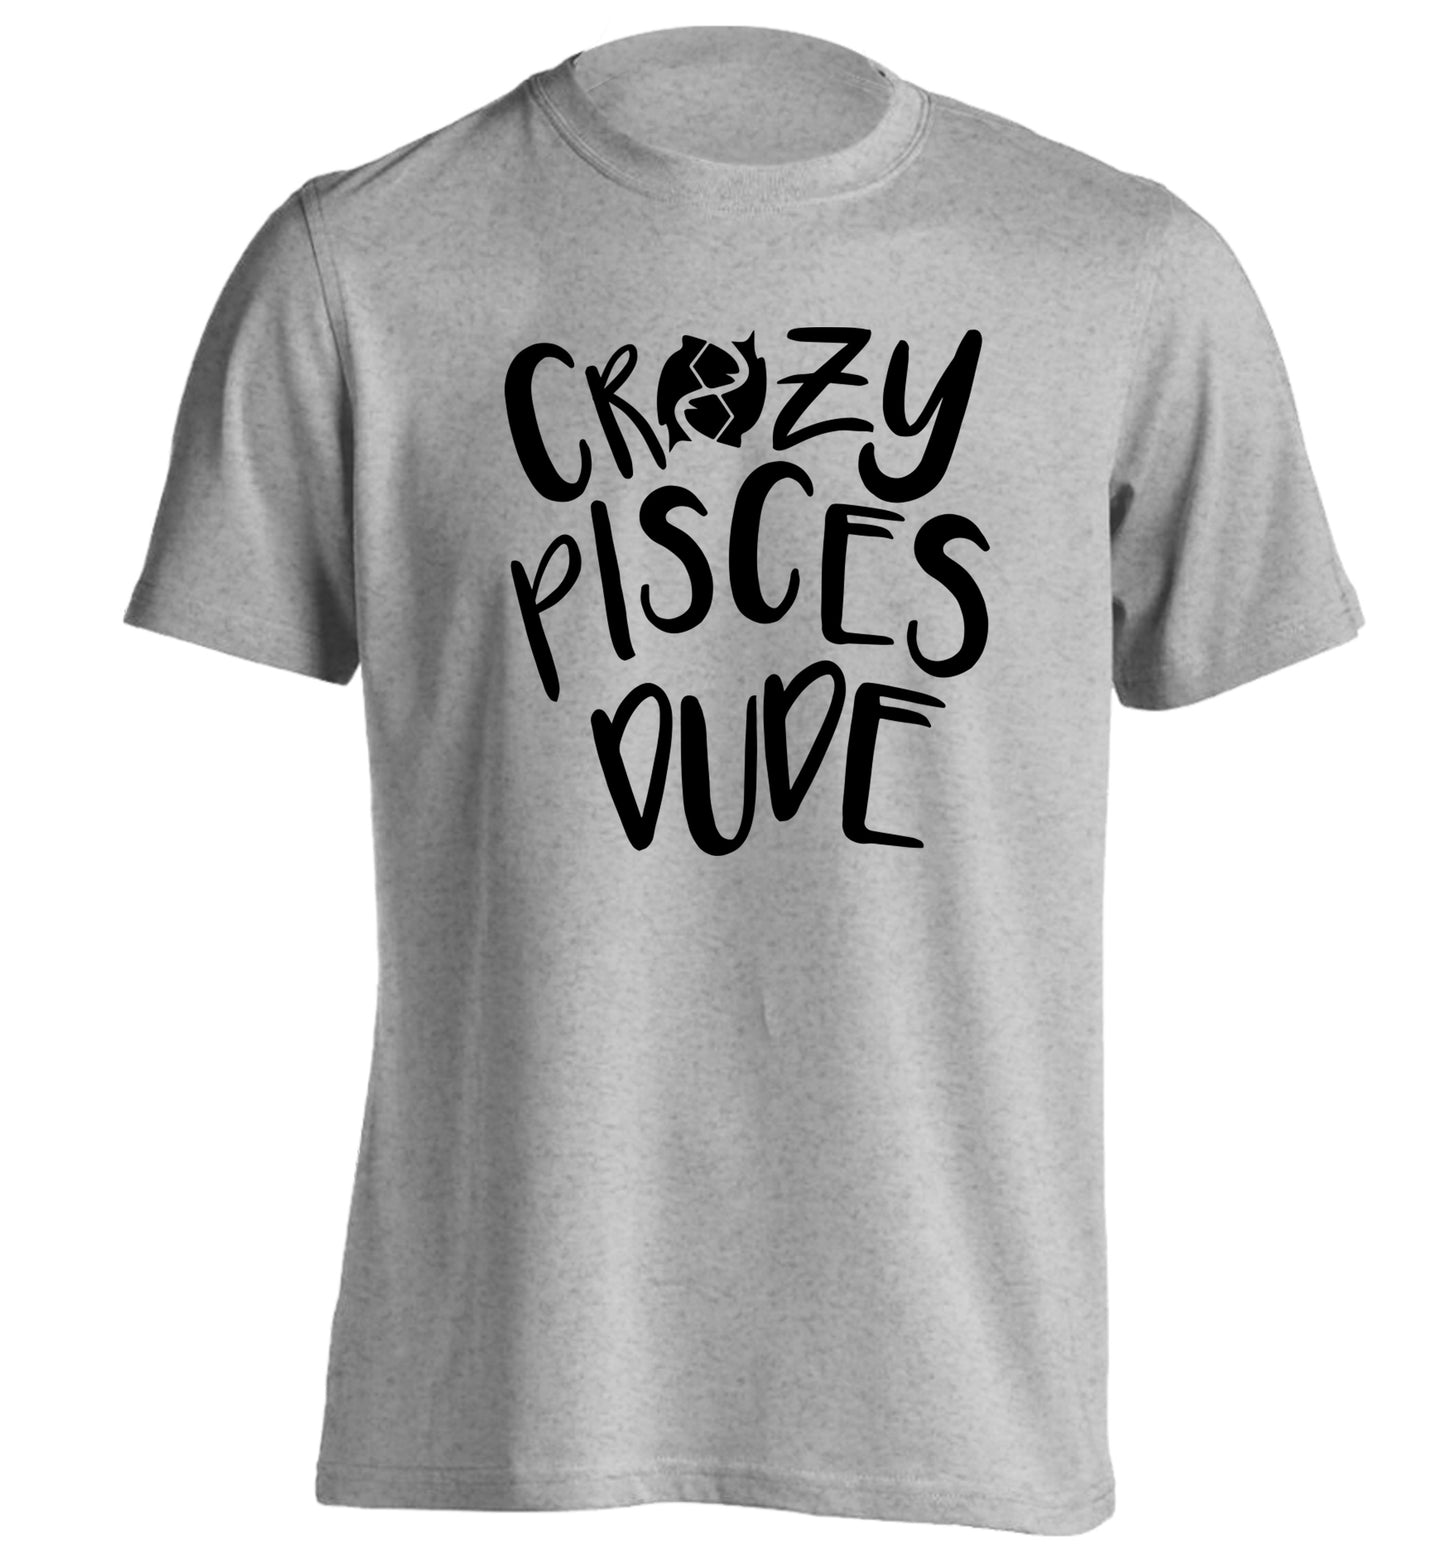 Crazy pisces dude adults unisex grey Tshirt 2XL